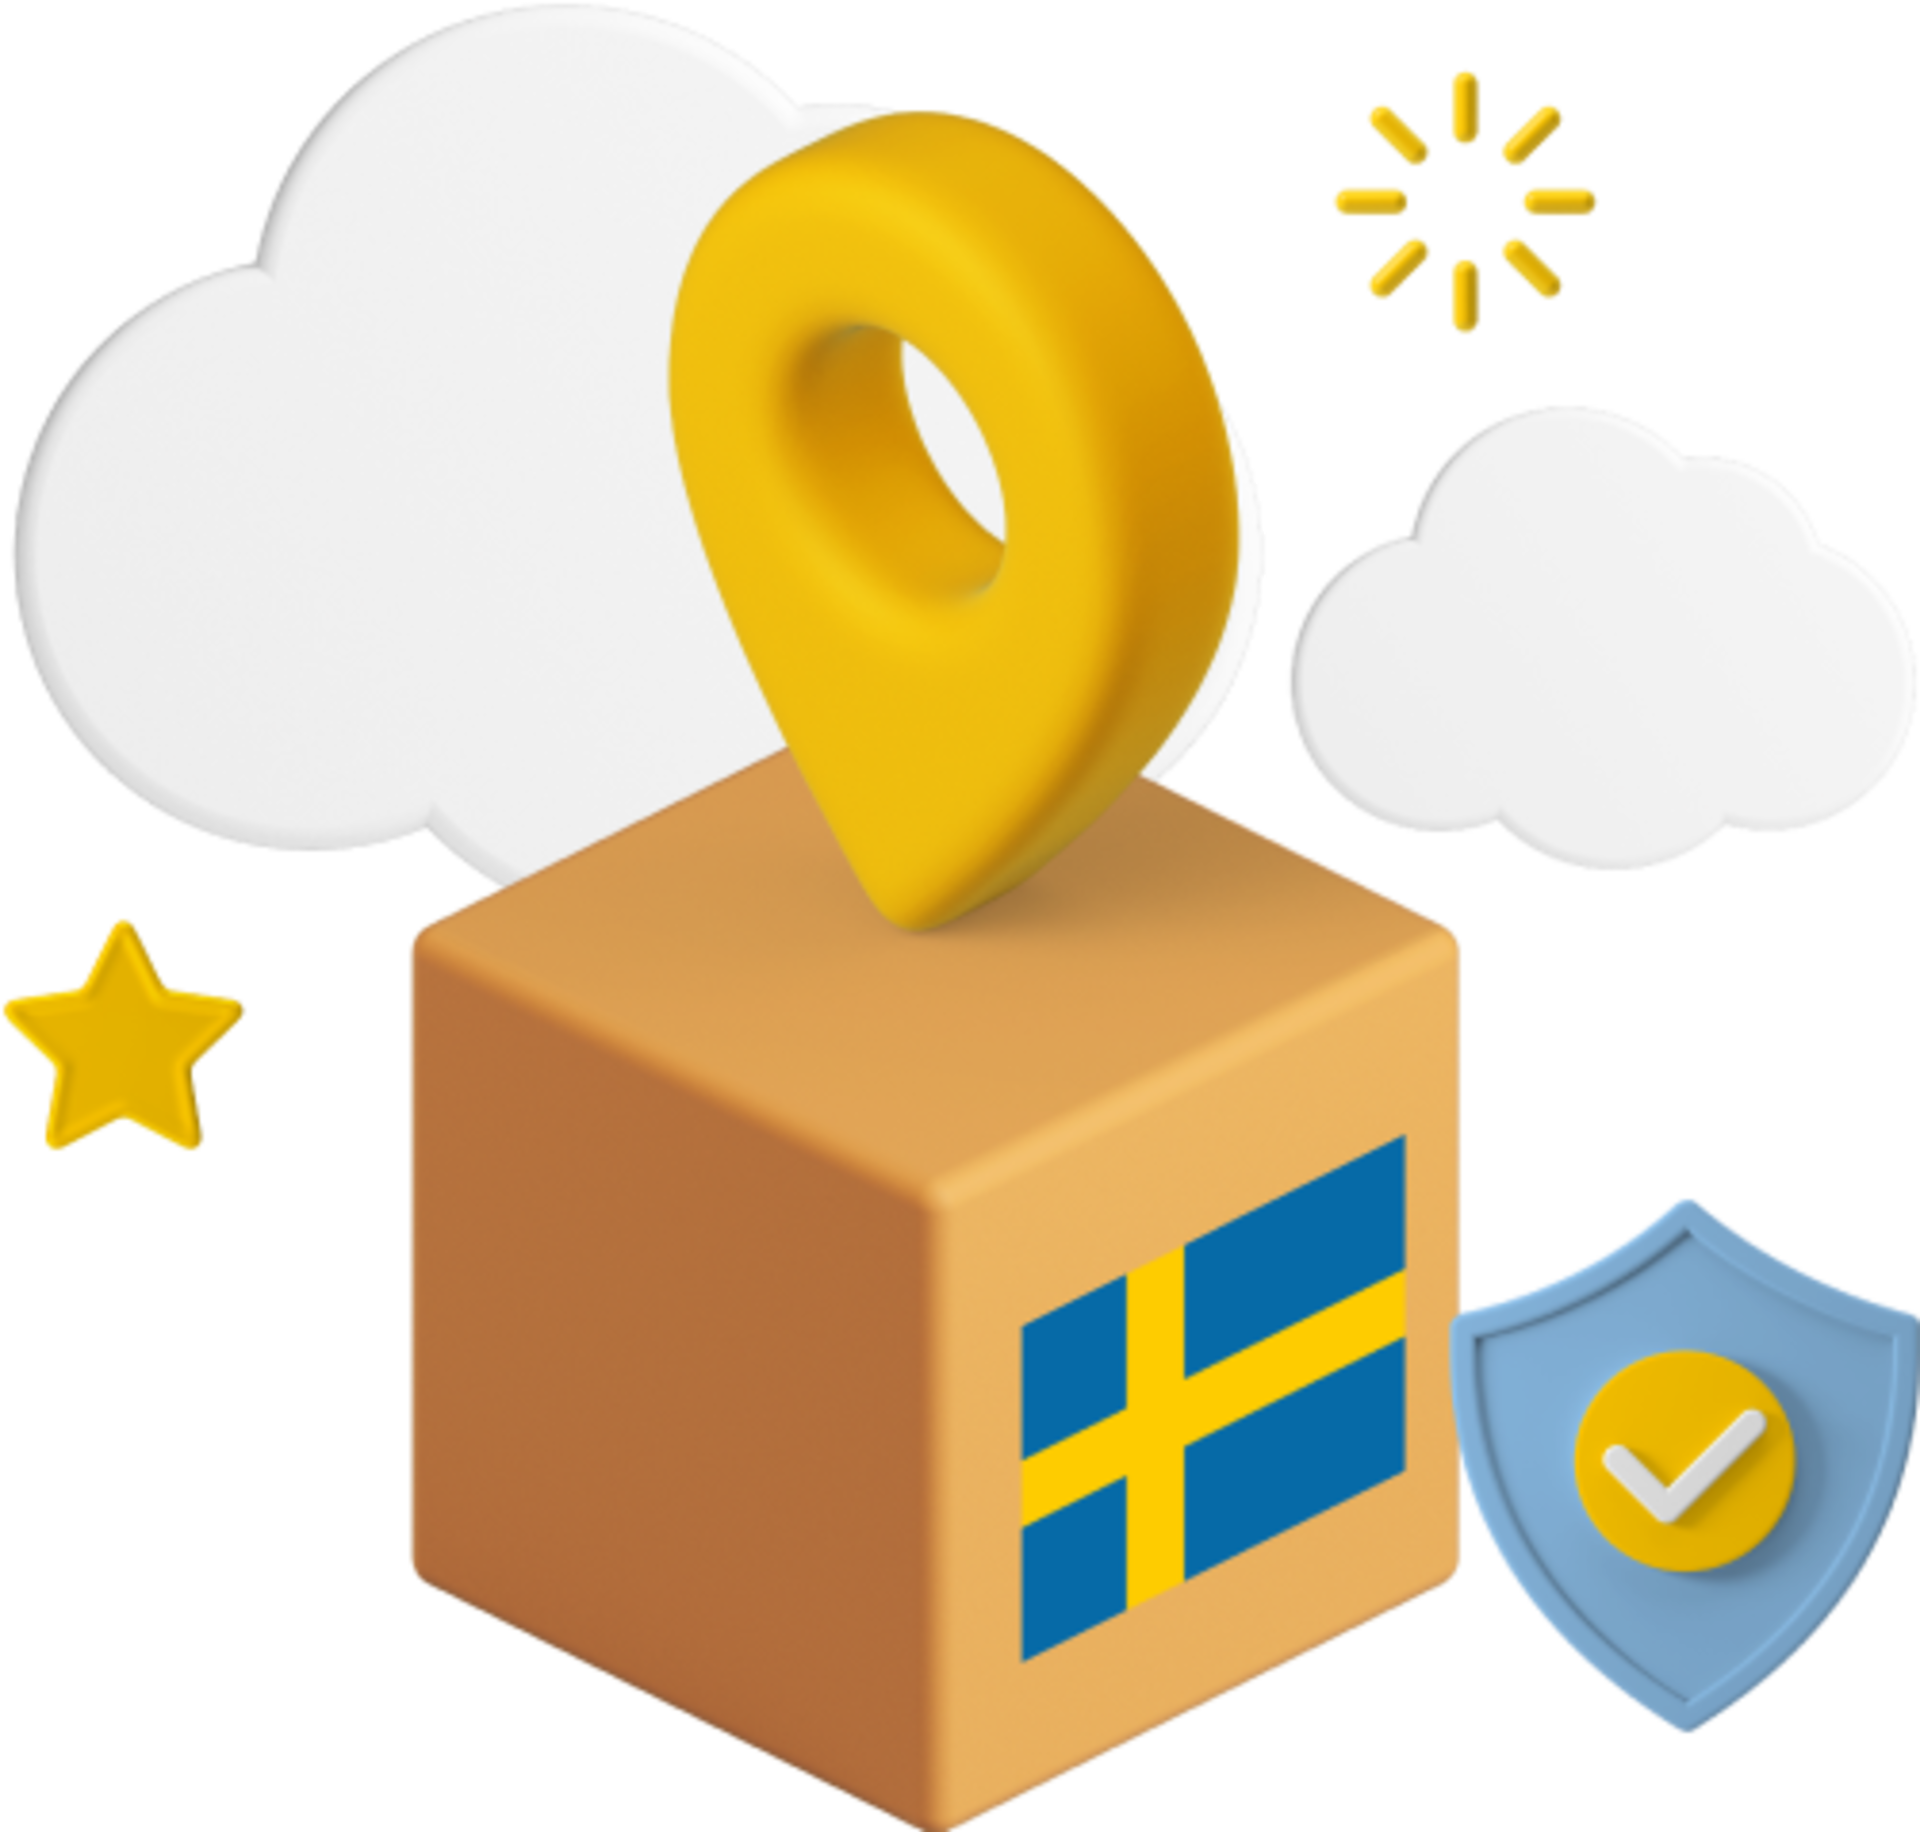 Box with Swedish flag on